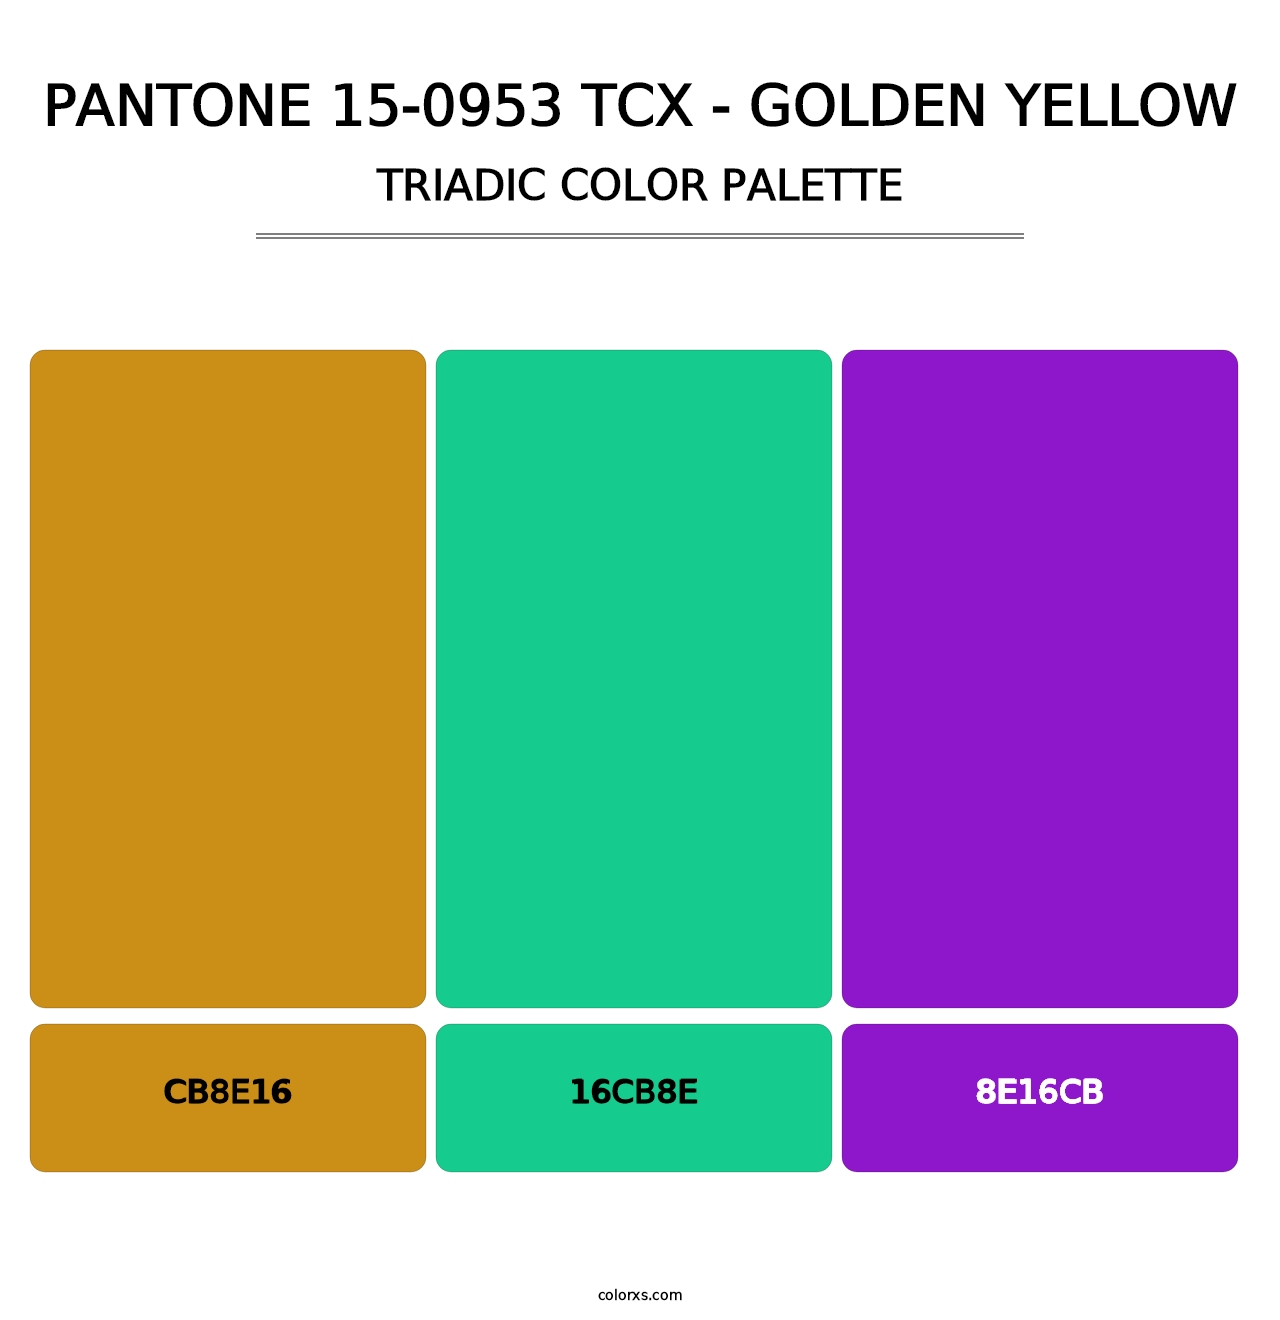 PANTONE 15-0953 TCX - Golden Yellow - Triadic Color Palette